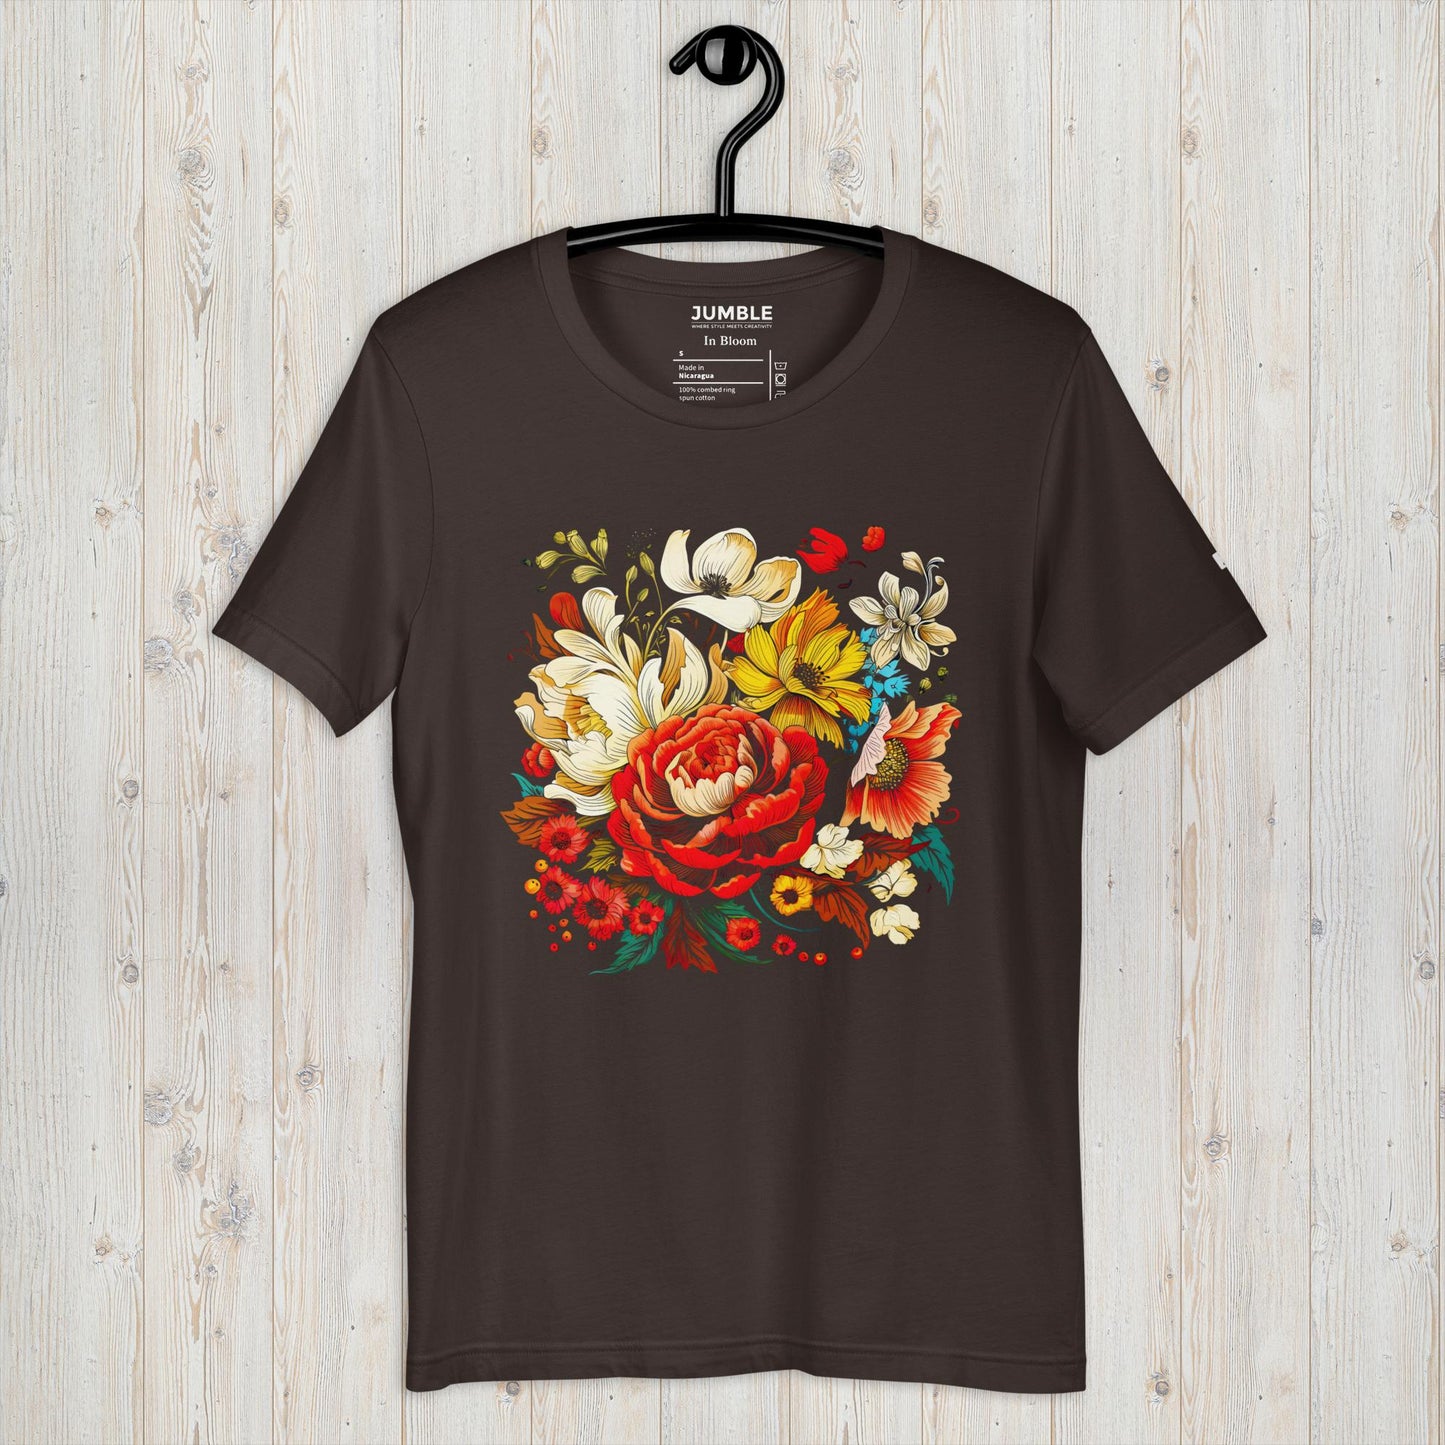 In Bloom Unisex T-Shirt - Brown Color - On Hanger